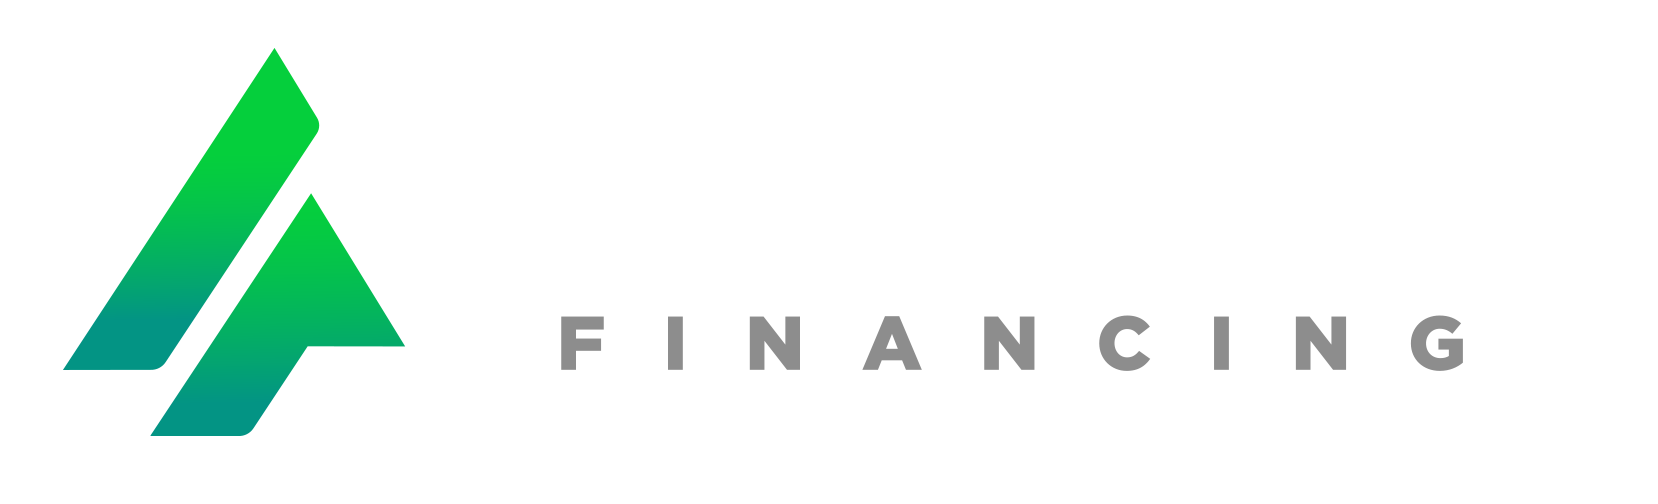 AP Equipment Financing